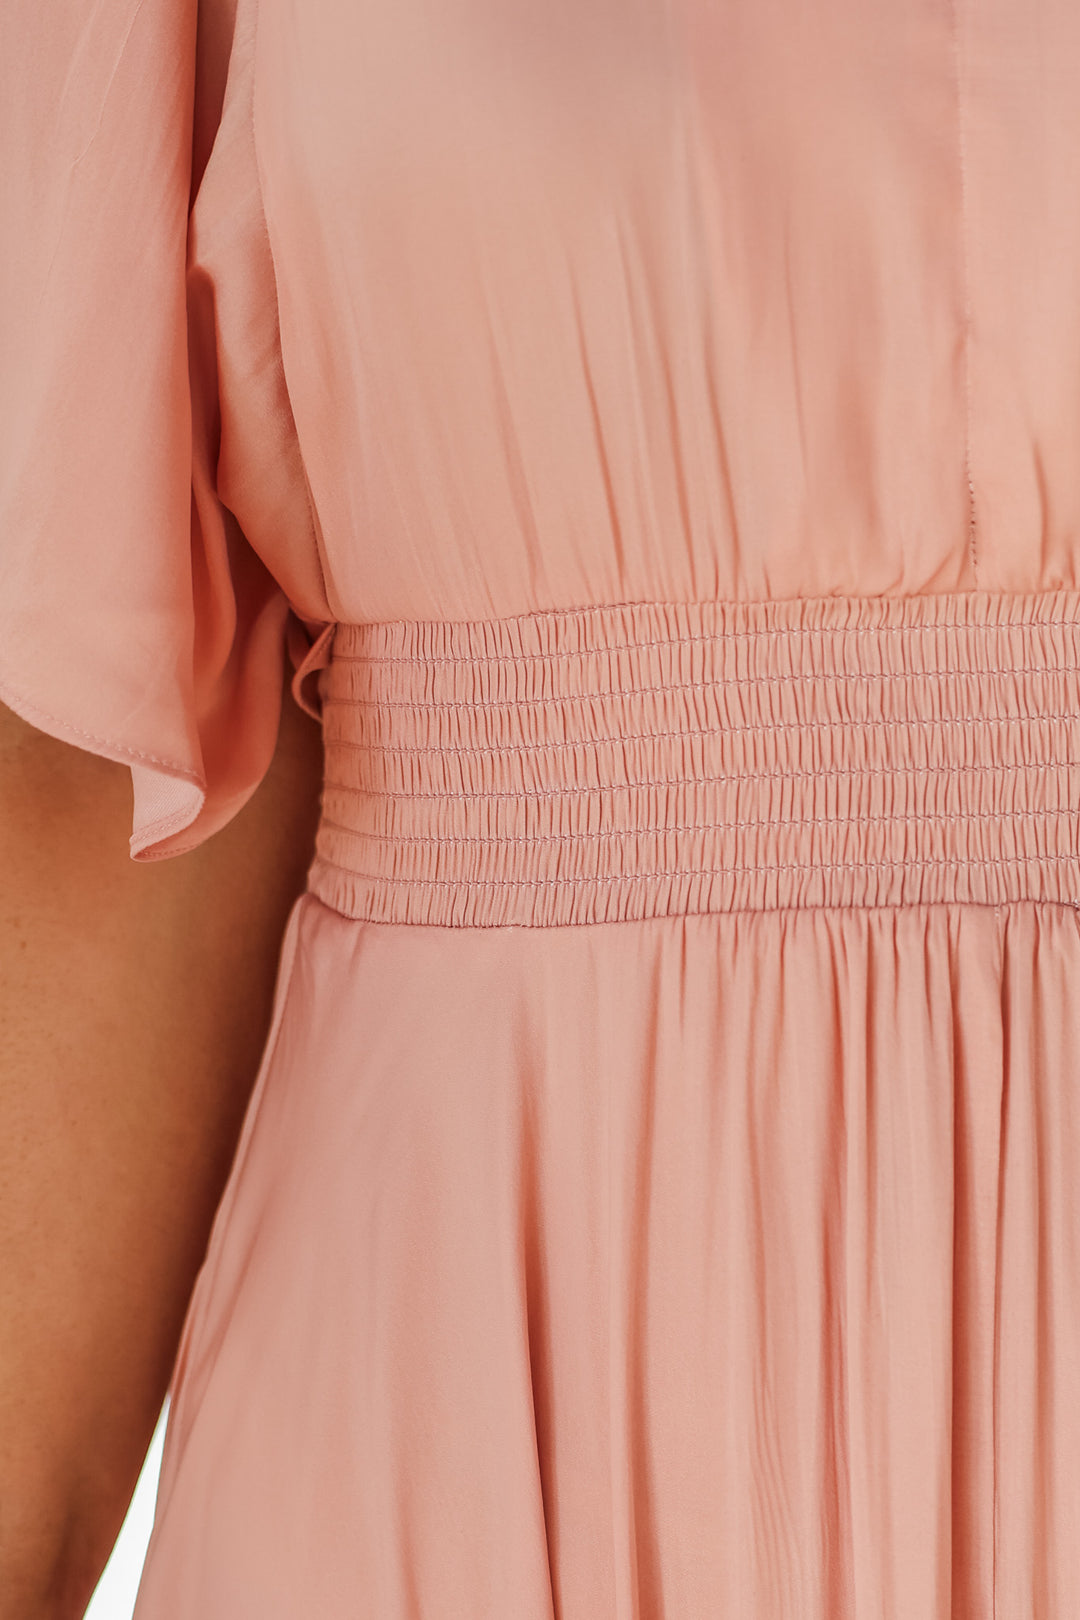 A closeup of the smocked waist on a peach colored dress.